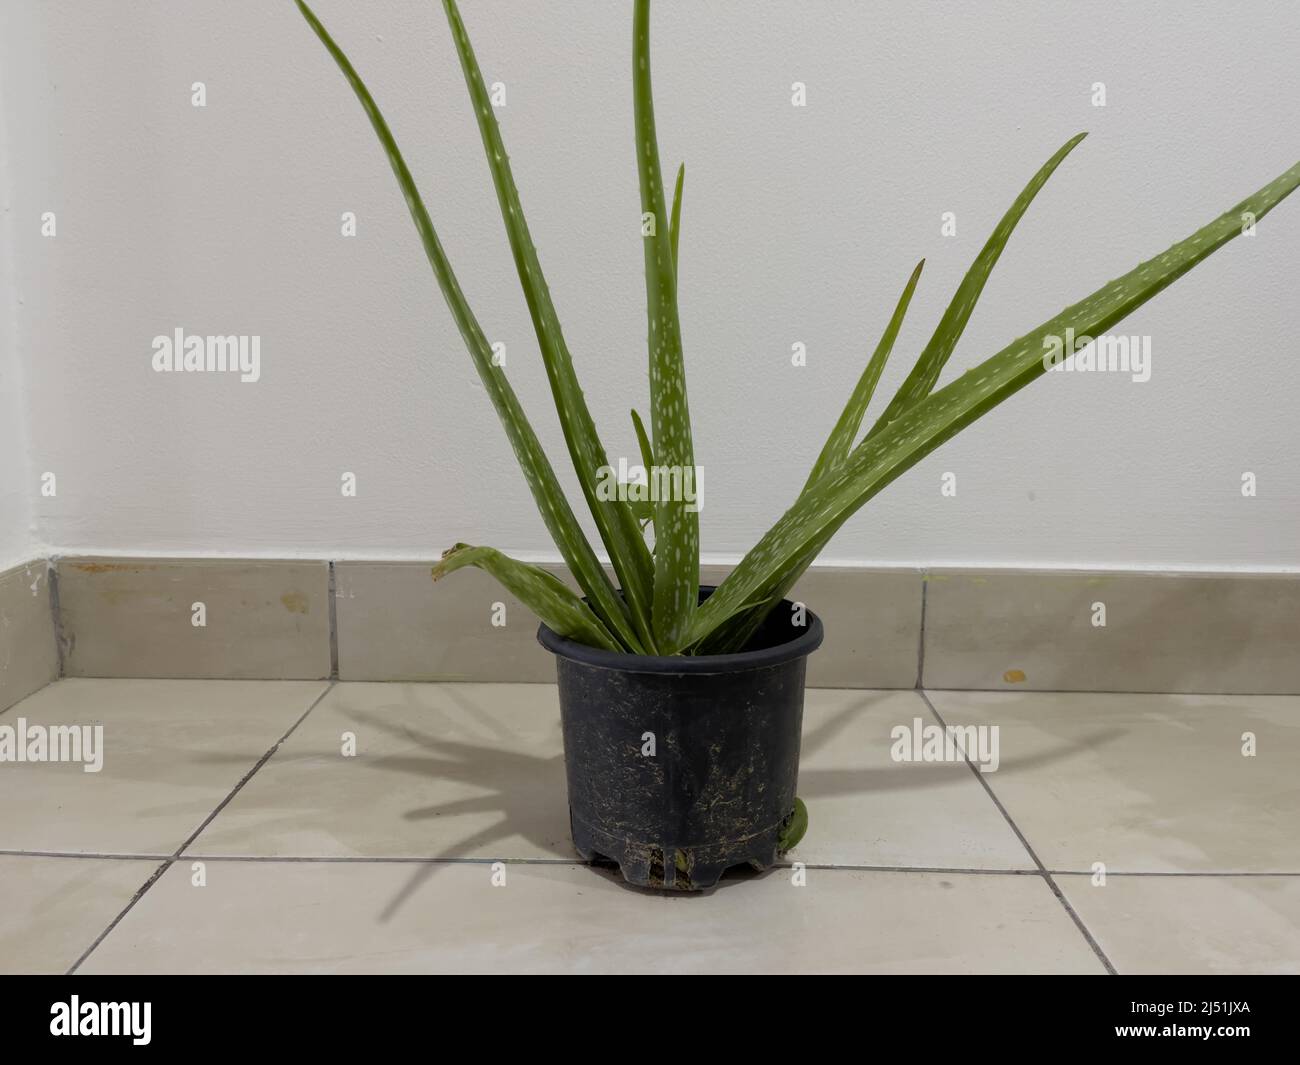 Aloe vera plant in a black flowerpot on the floor indoors. Stock Photo